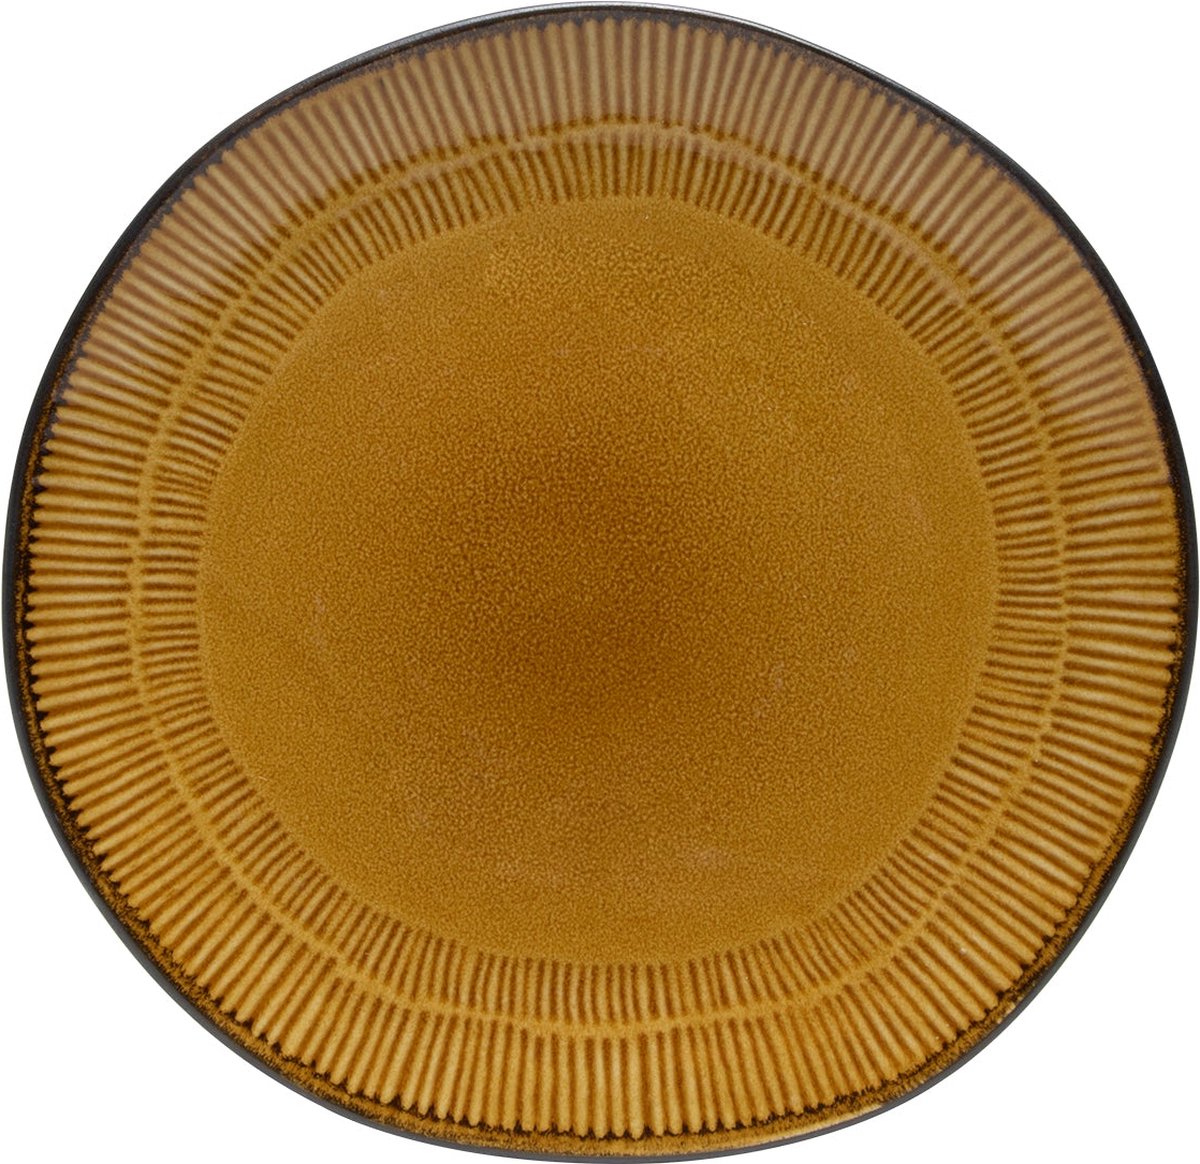 Tavola - Ontbijtborden - Amber Evia - Kleur Amber - Ø22cm - Lichte glans - Aardewerk - 6 stuks - Servies